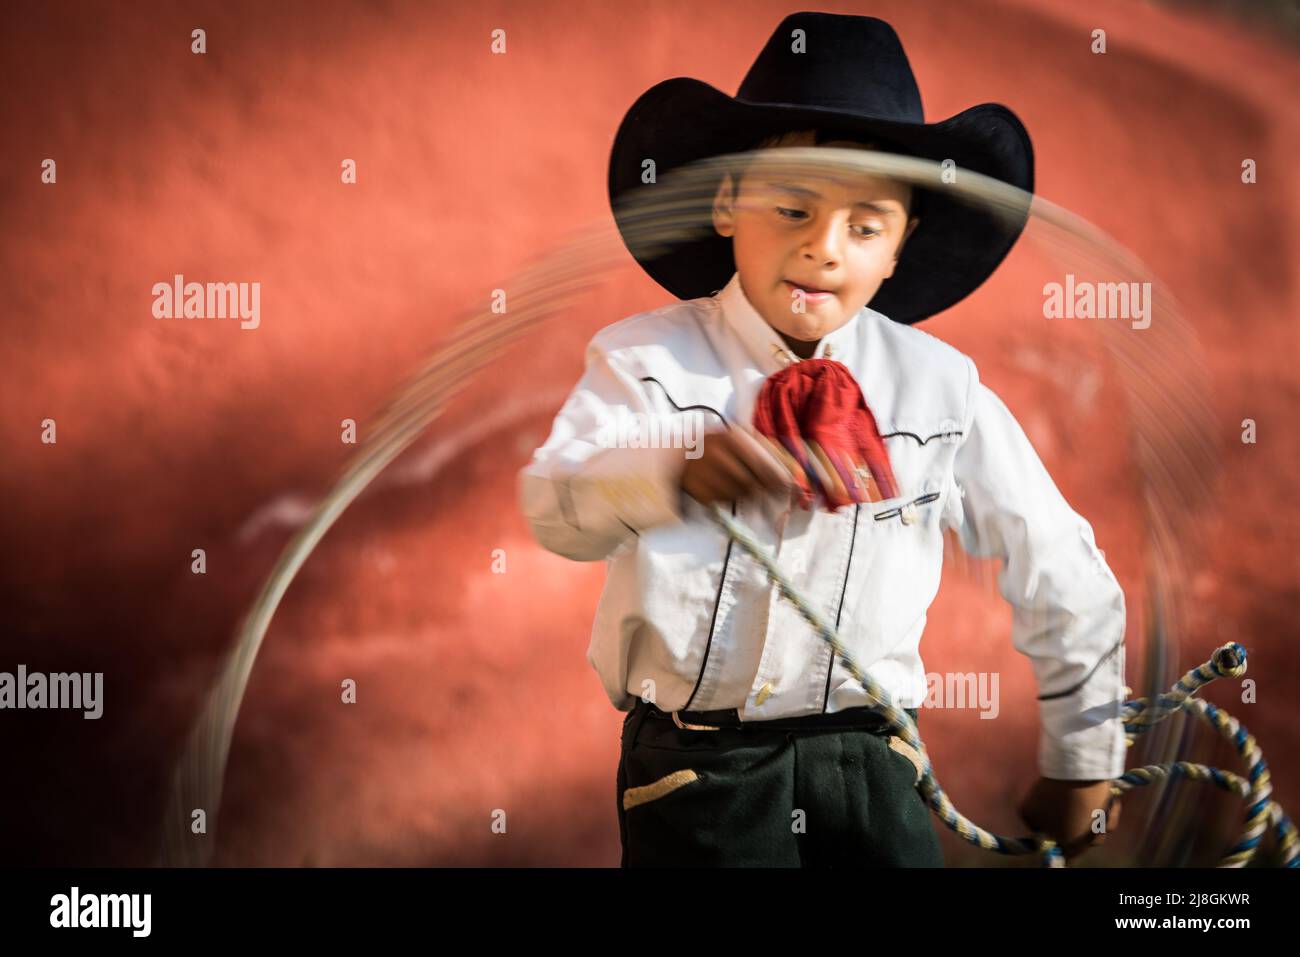 Cowboy Child. Stock Photo